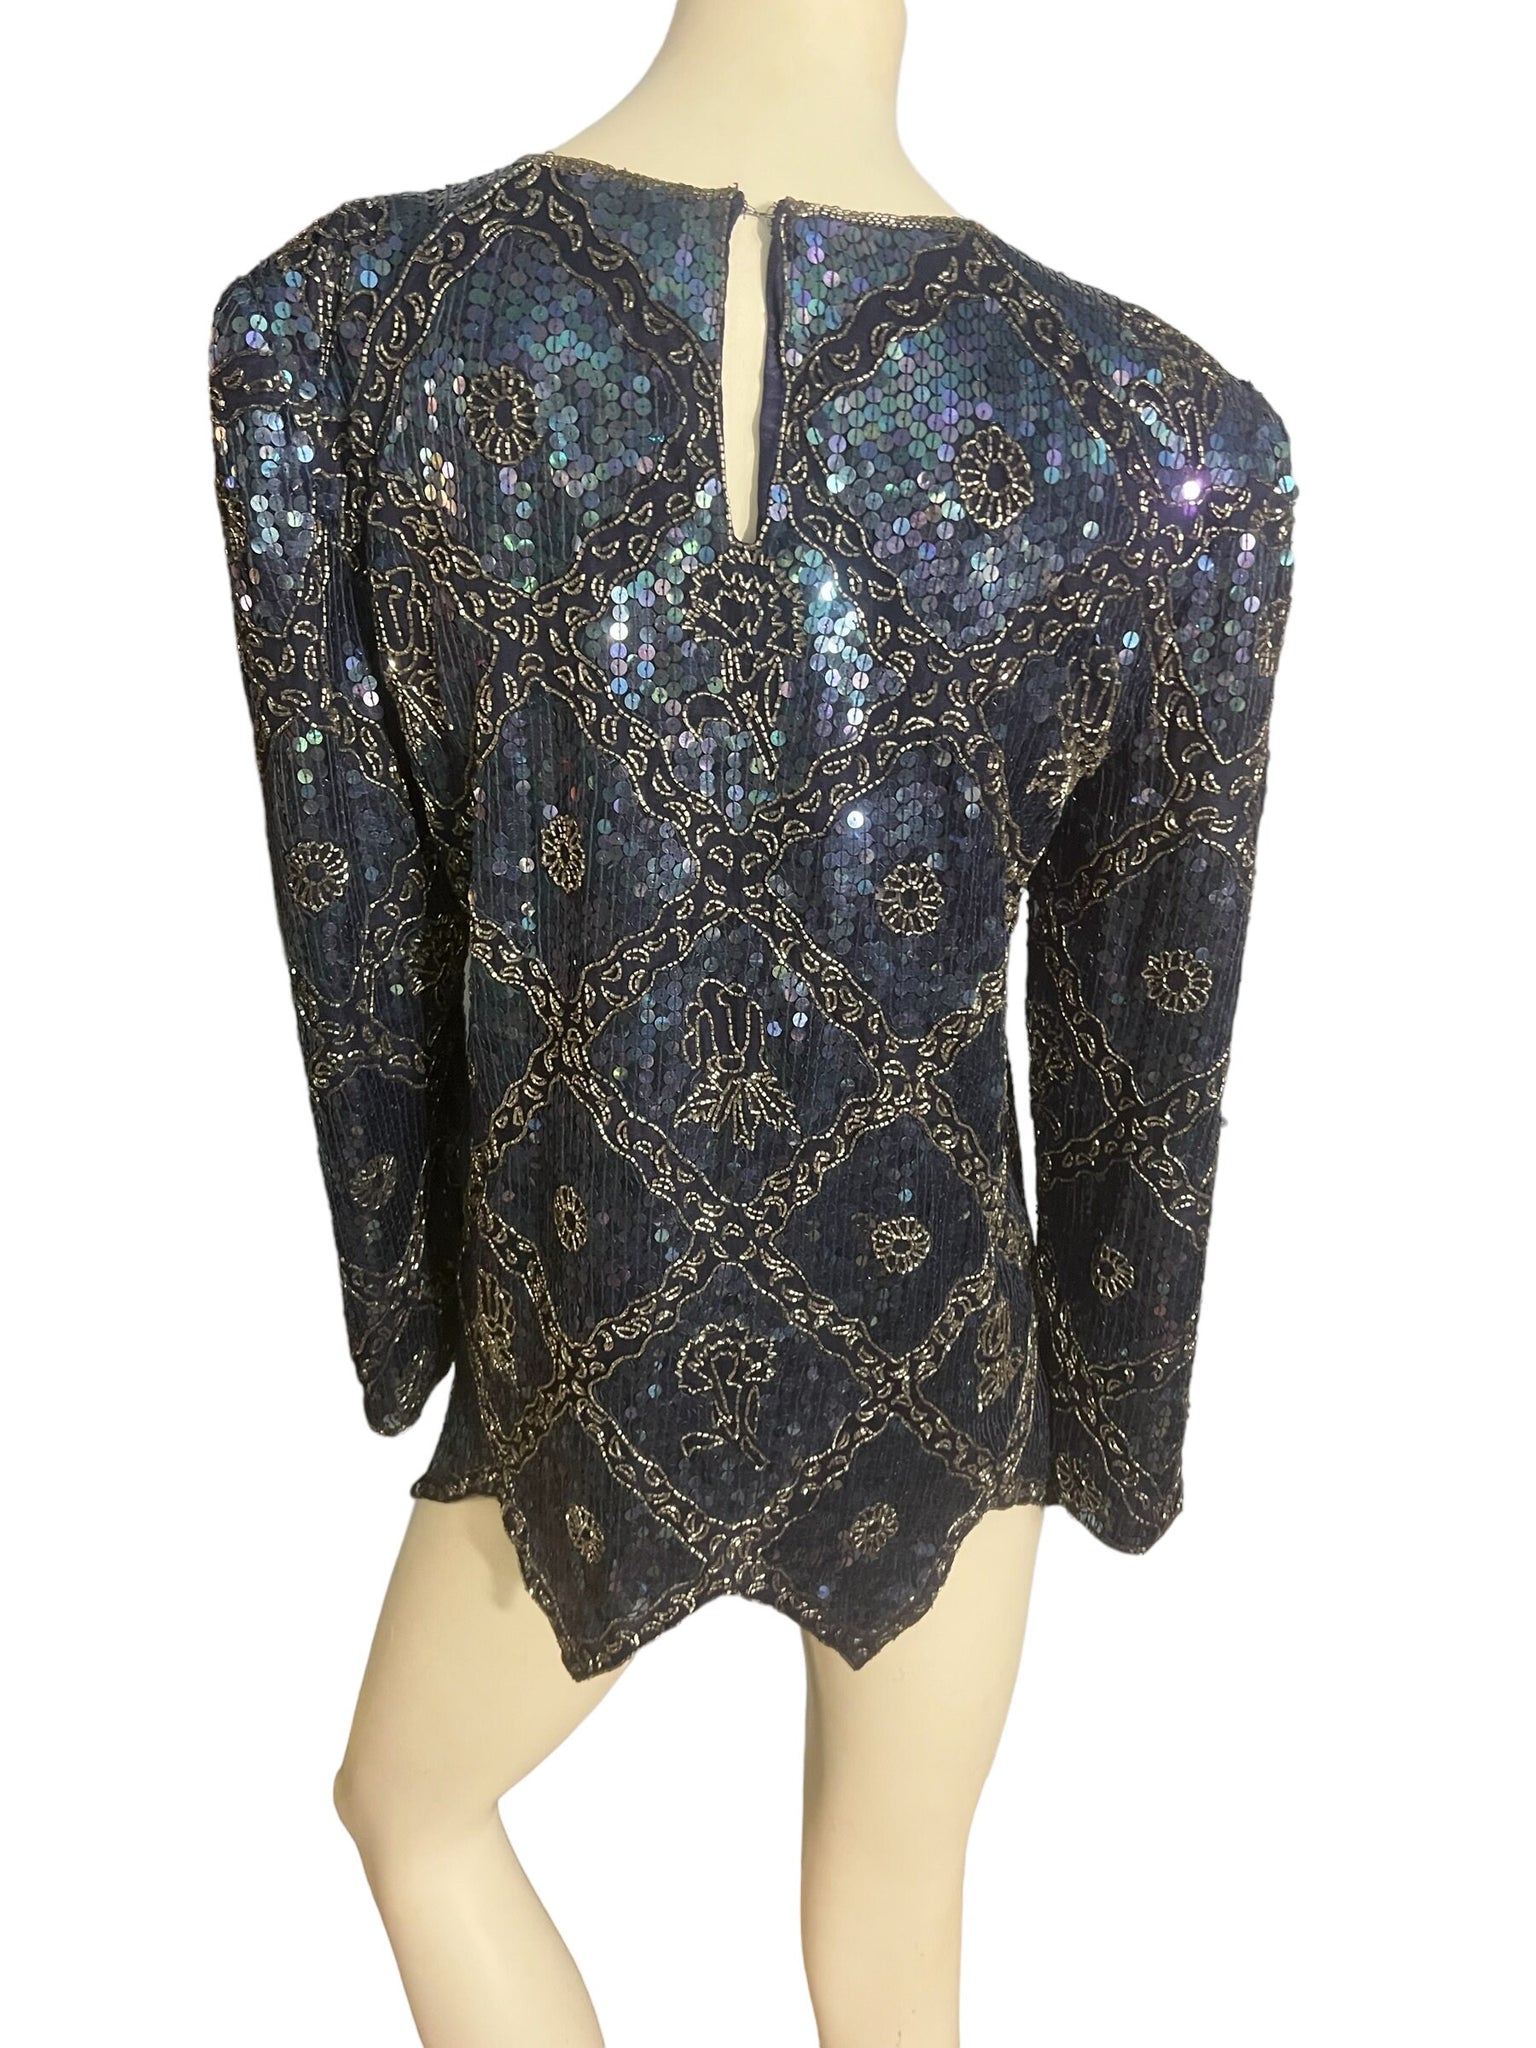 Vintage blue & black sequin shirt S Nina Couture